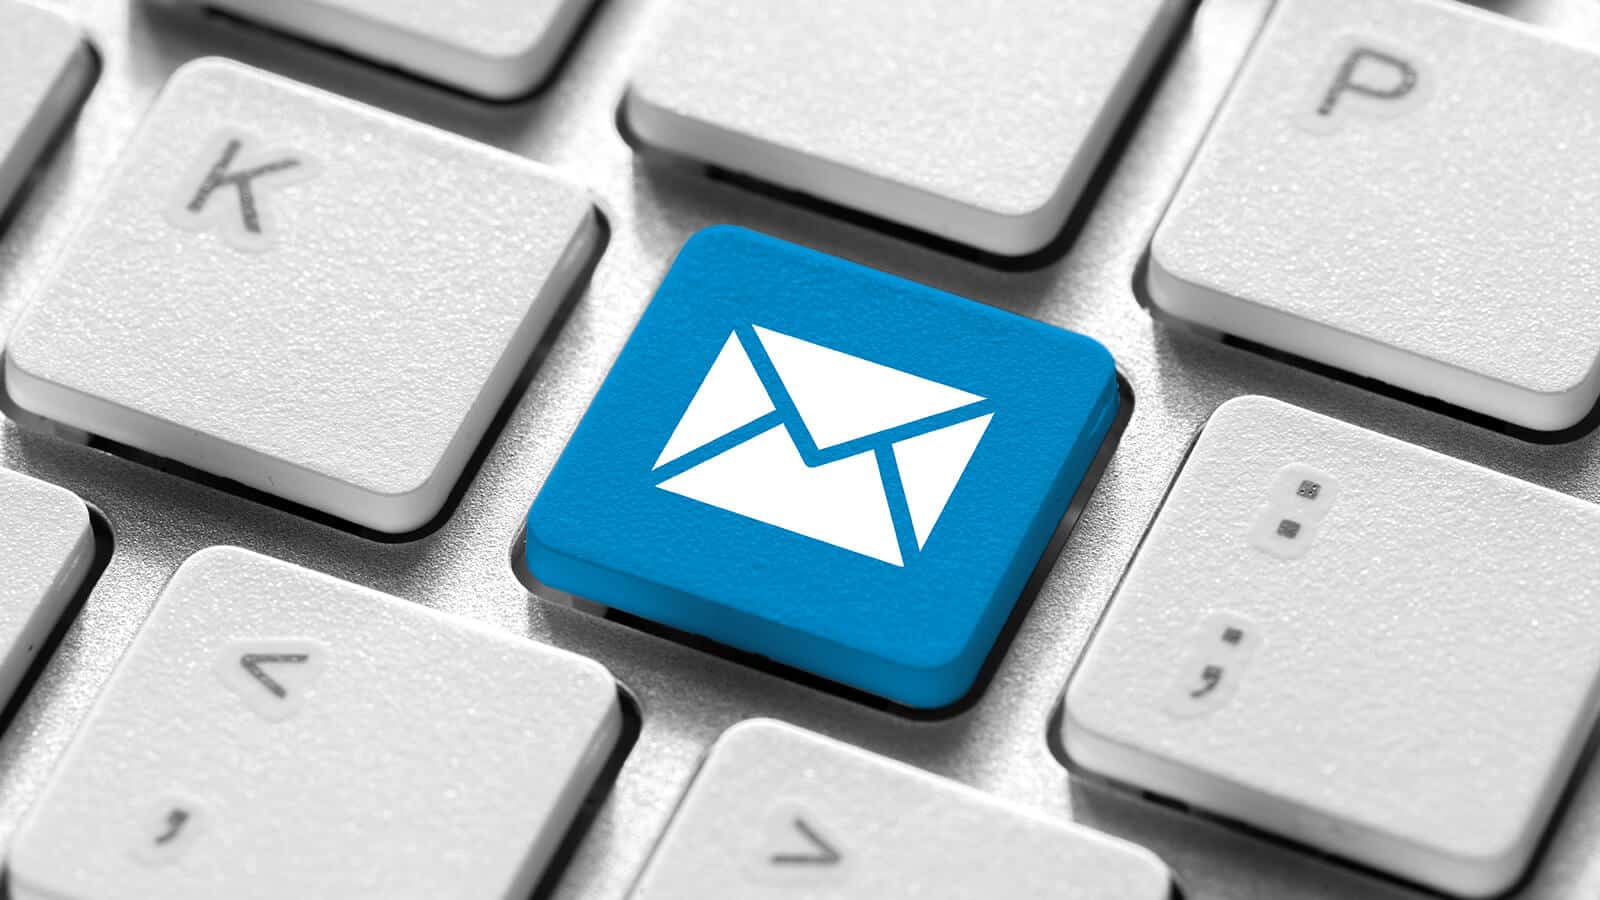 Tastatur mit E-Mail Marketing Logo